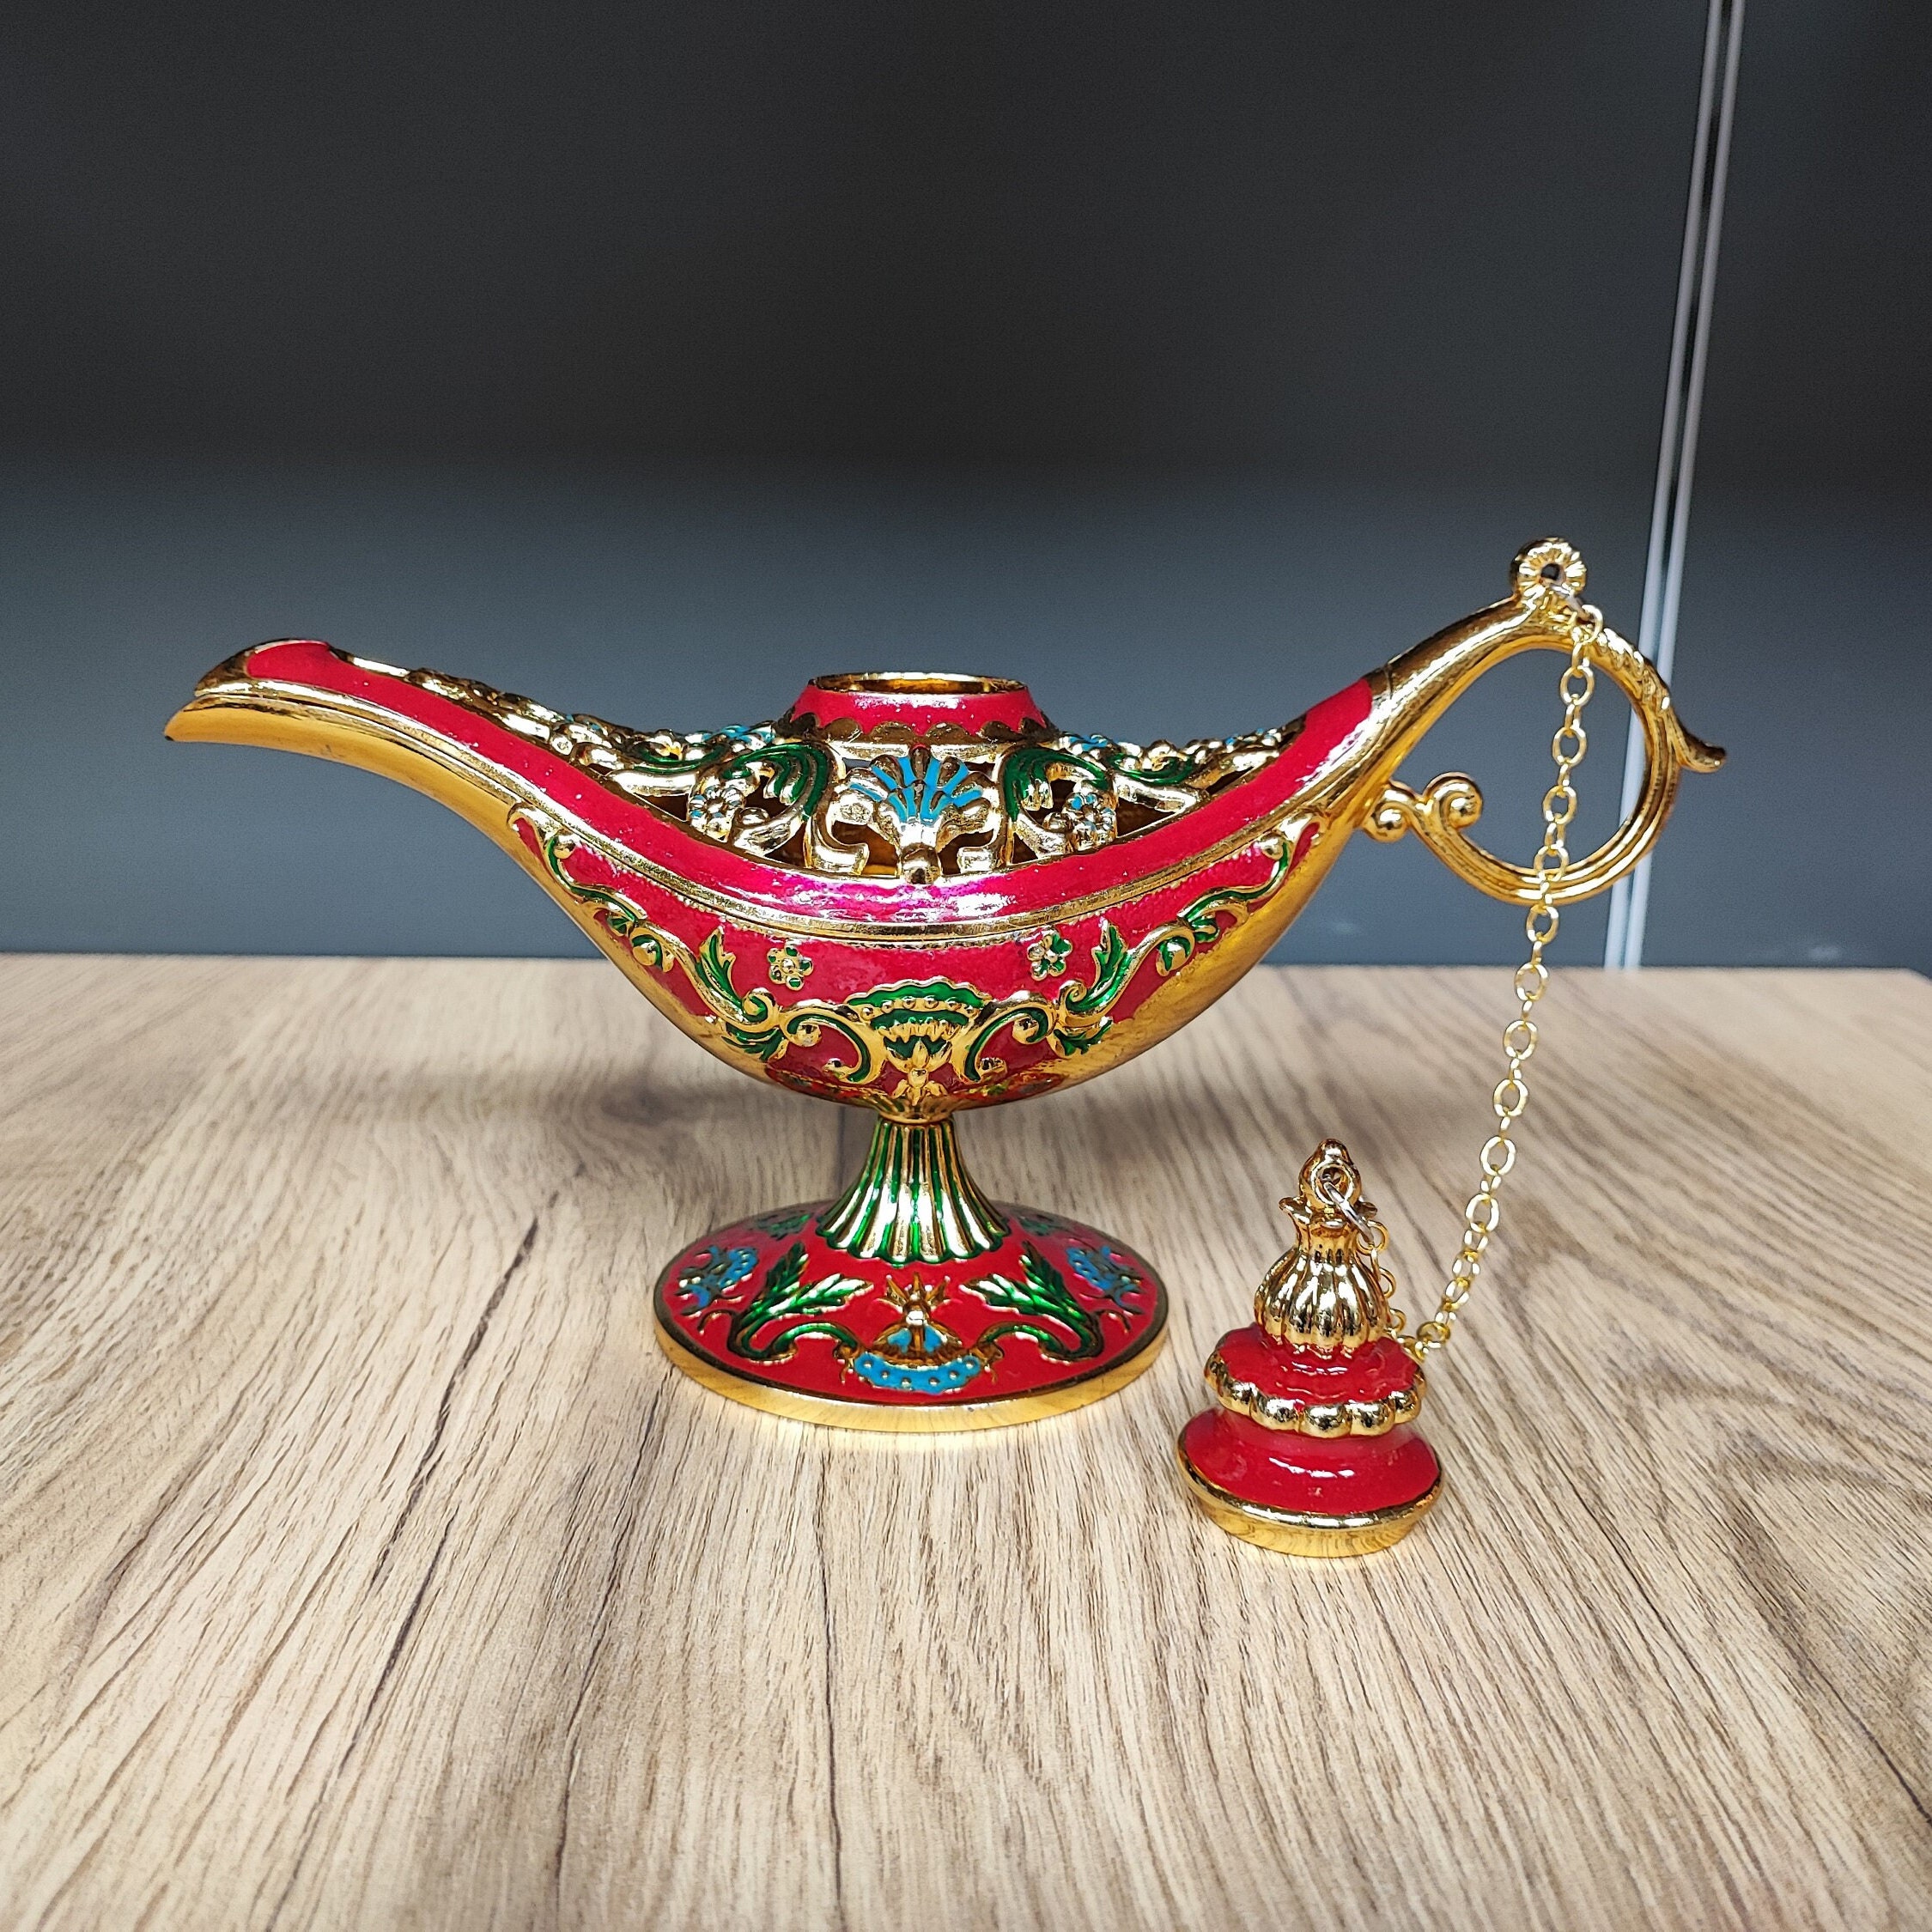 Brass Genie Oil Lamp Incense Burner Magic Lamp Middle Eastern